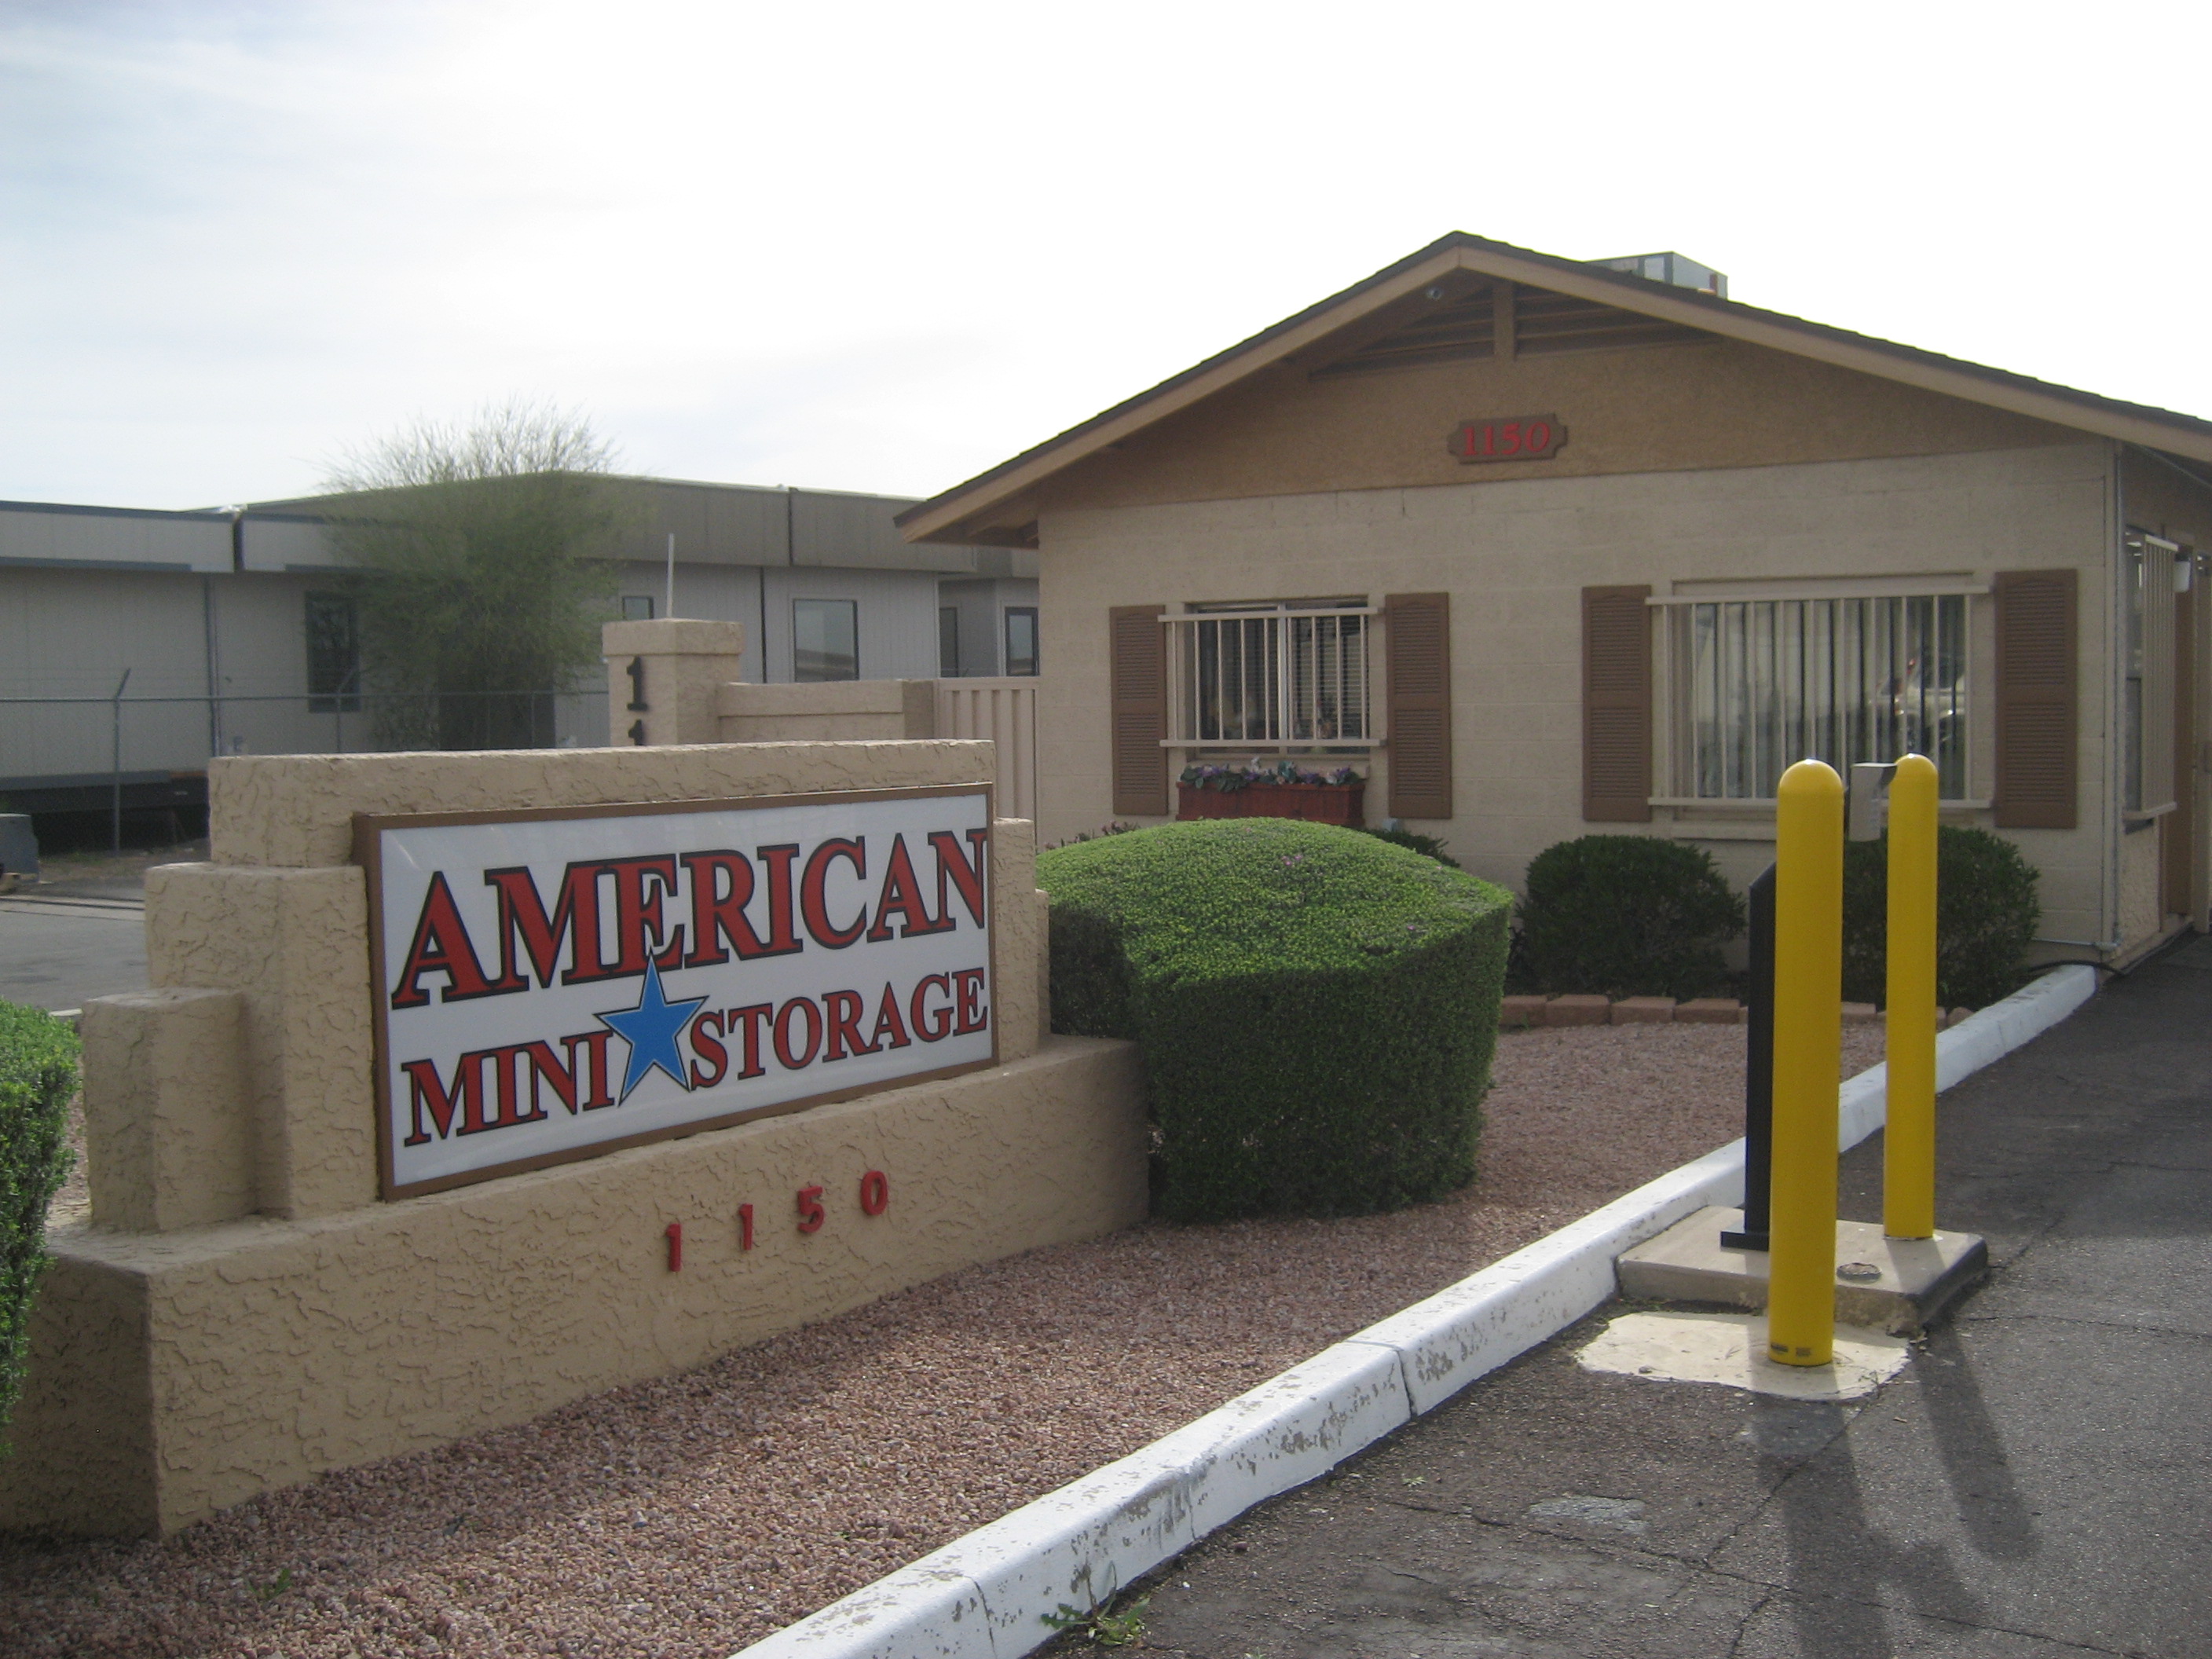 Self Storage in Chandler, Storage facilities in Chandler, Storage units in Chandler, Cheap storage in chandler. Chandler AZ, Chandler